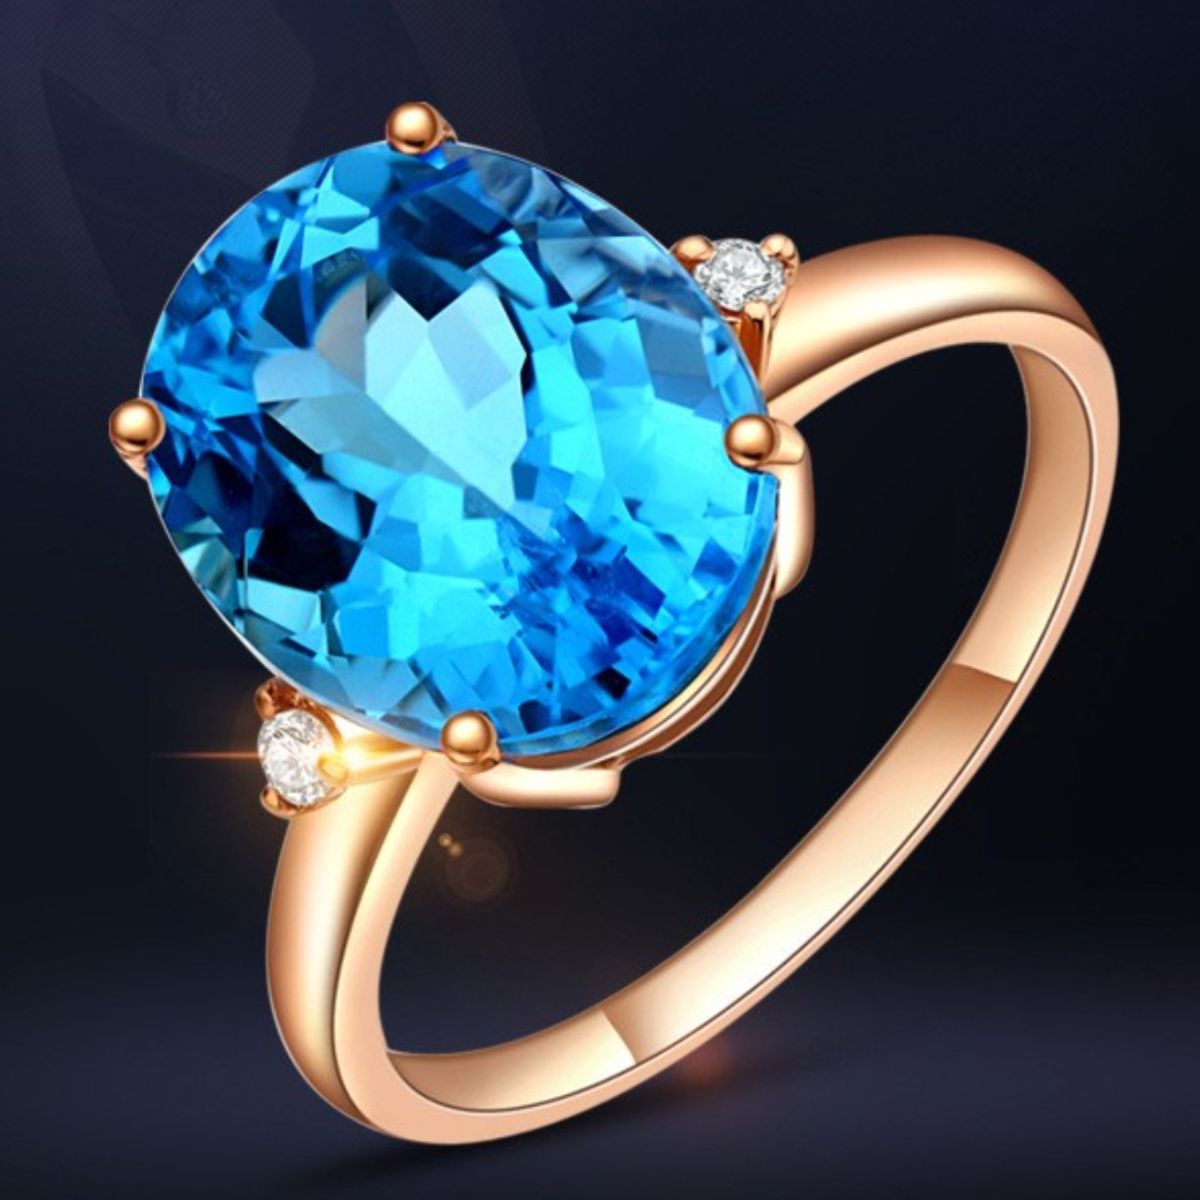 Lavish Rose Gold-Plated Gemstone Ring